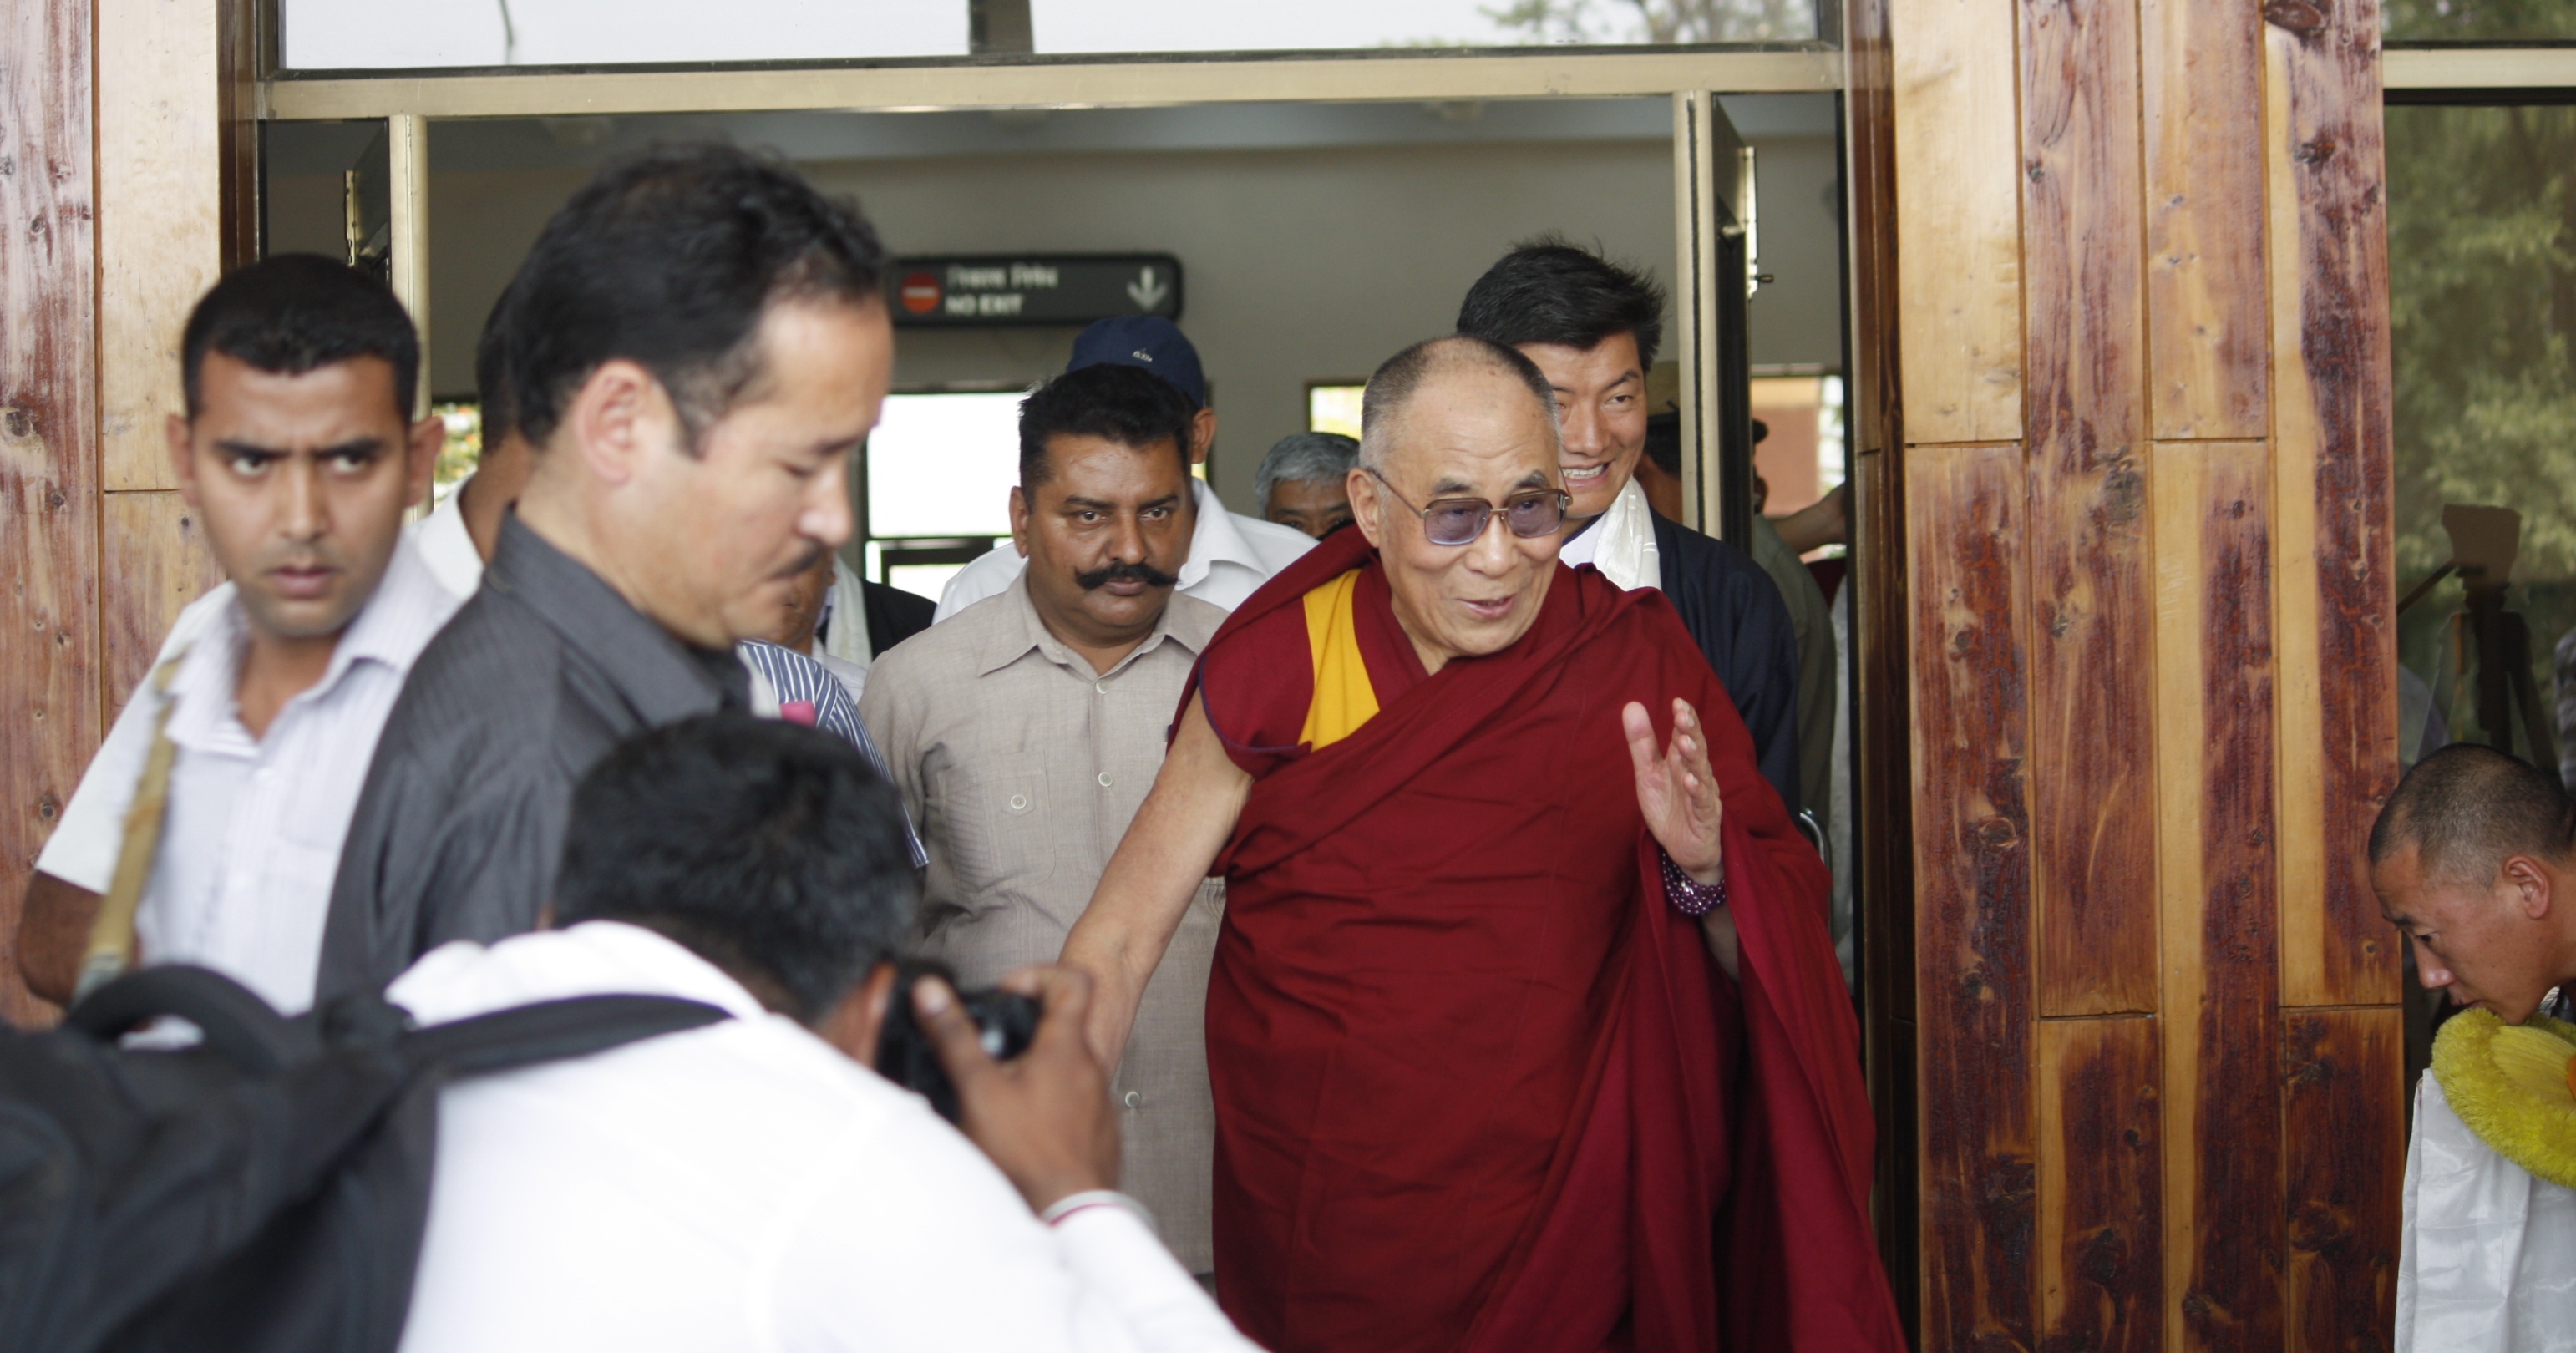 His Holiness the Dalai Lama returned to Dharamshala